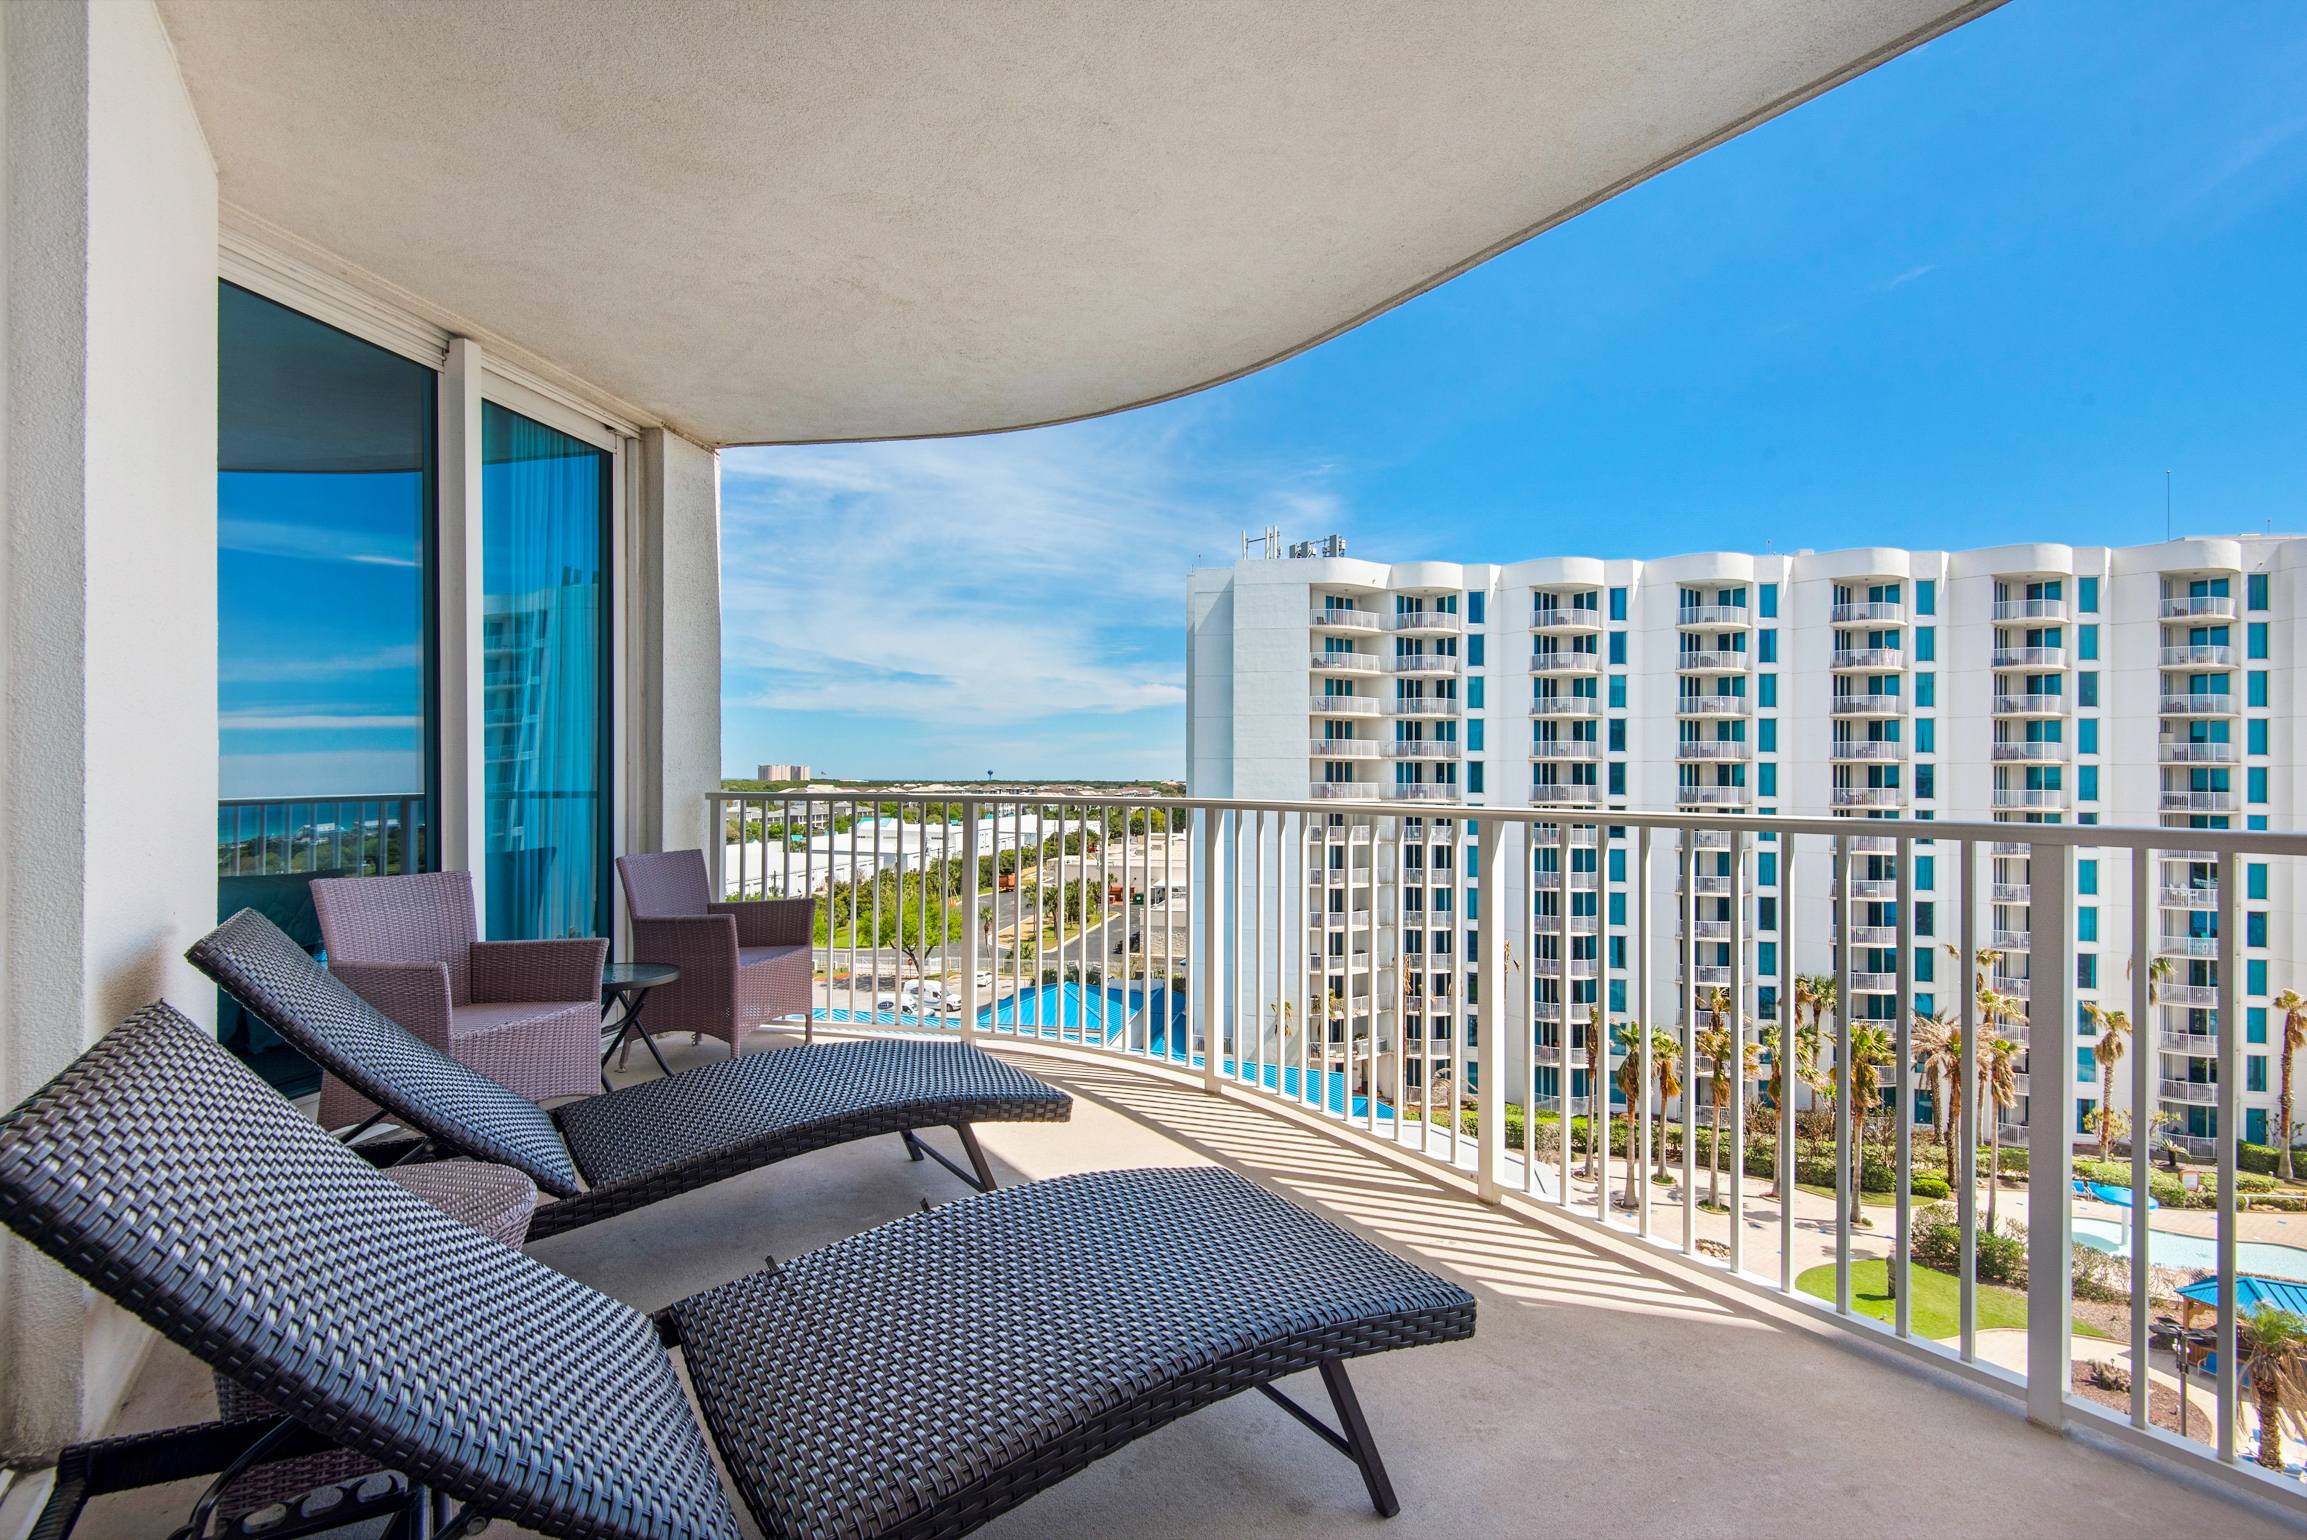 Palms Resort #2801  balcony views